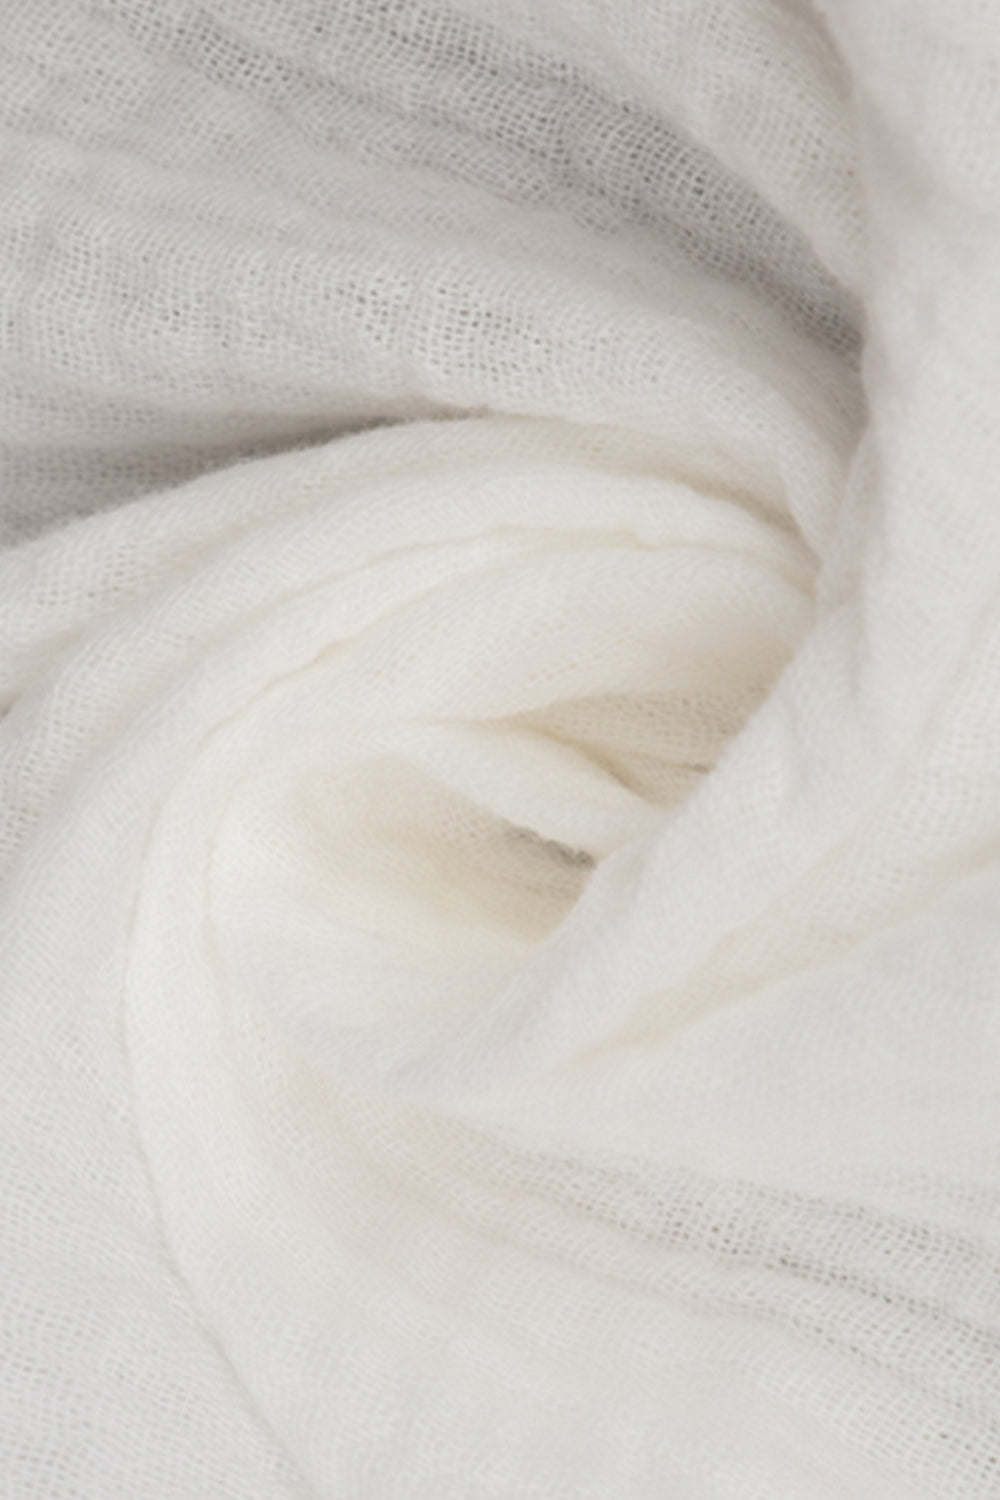 Women long-sleeved white cotton linen shorts Casual suit